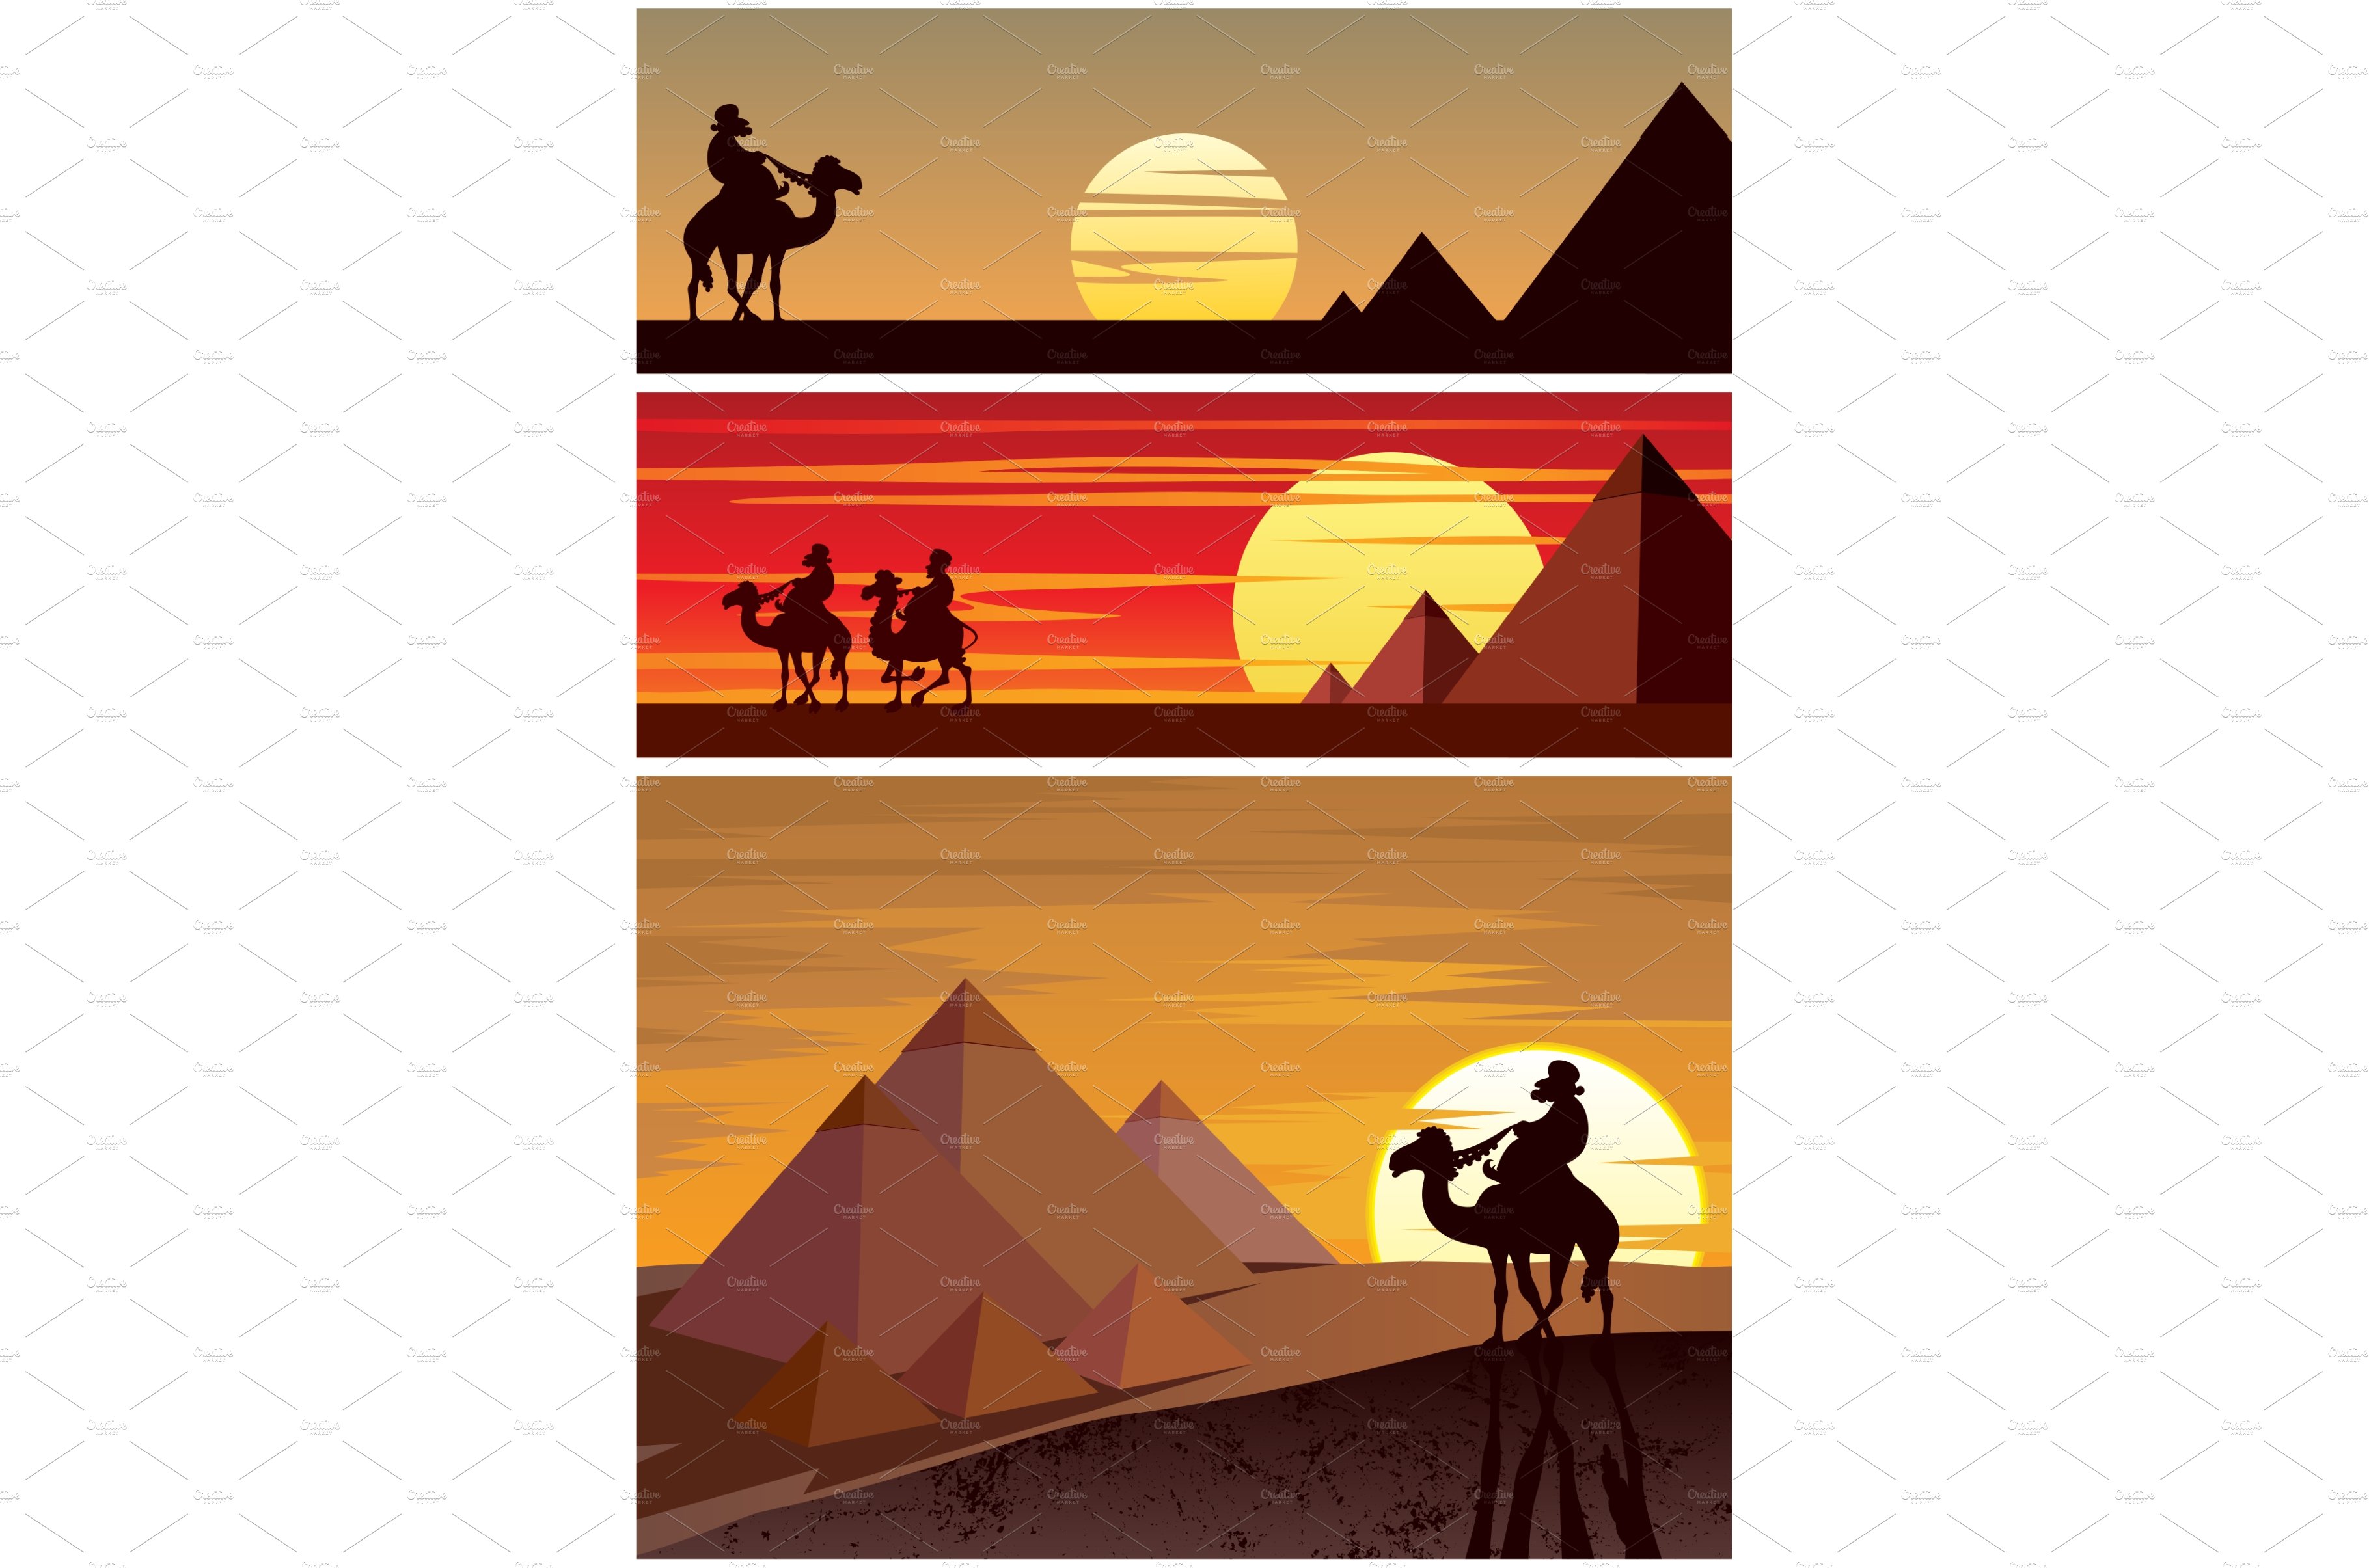 The Pyramids cover image.